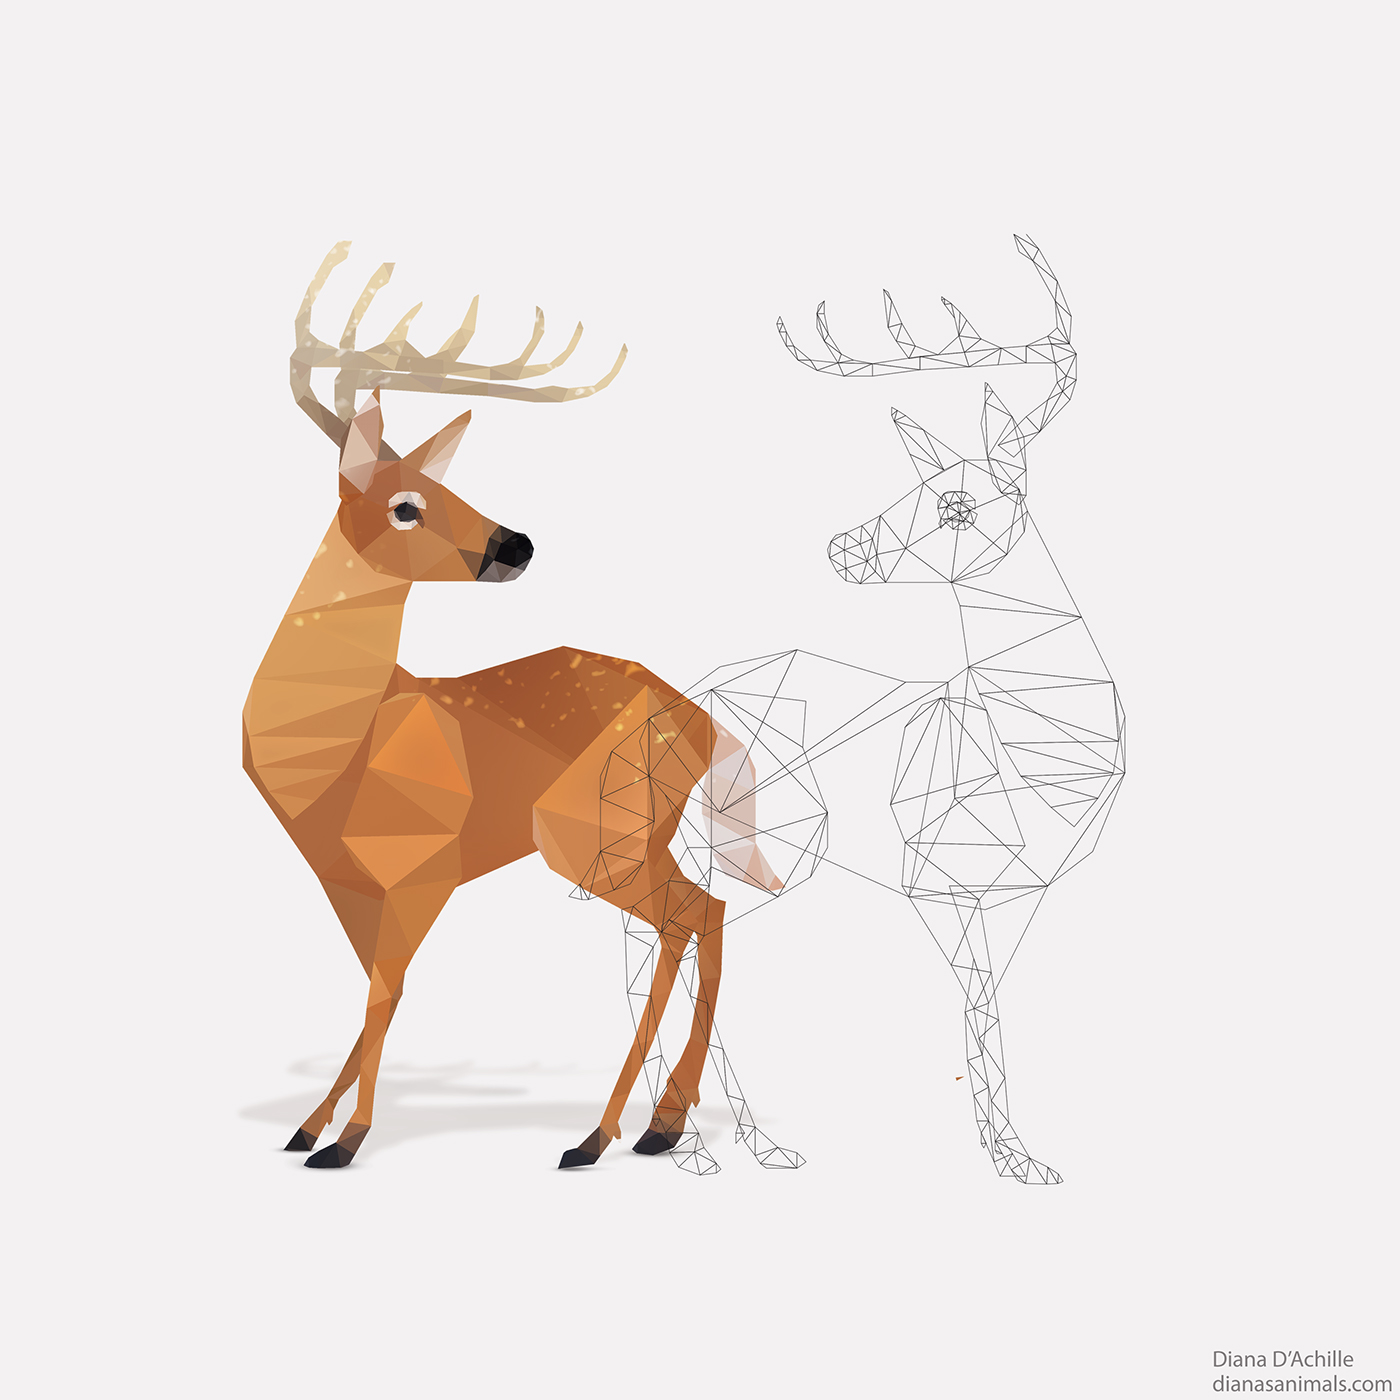 adobeawards adobe deer Low Poly animals adobecreativecloud inspire Adobe Awards Digital Art  low polygon